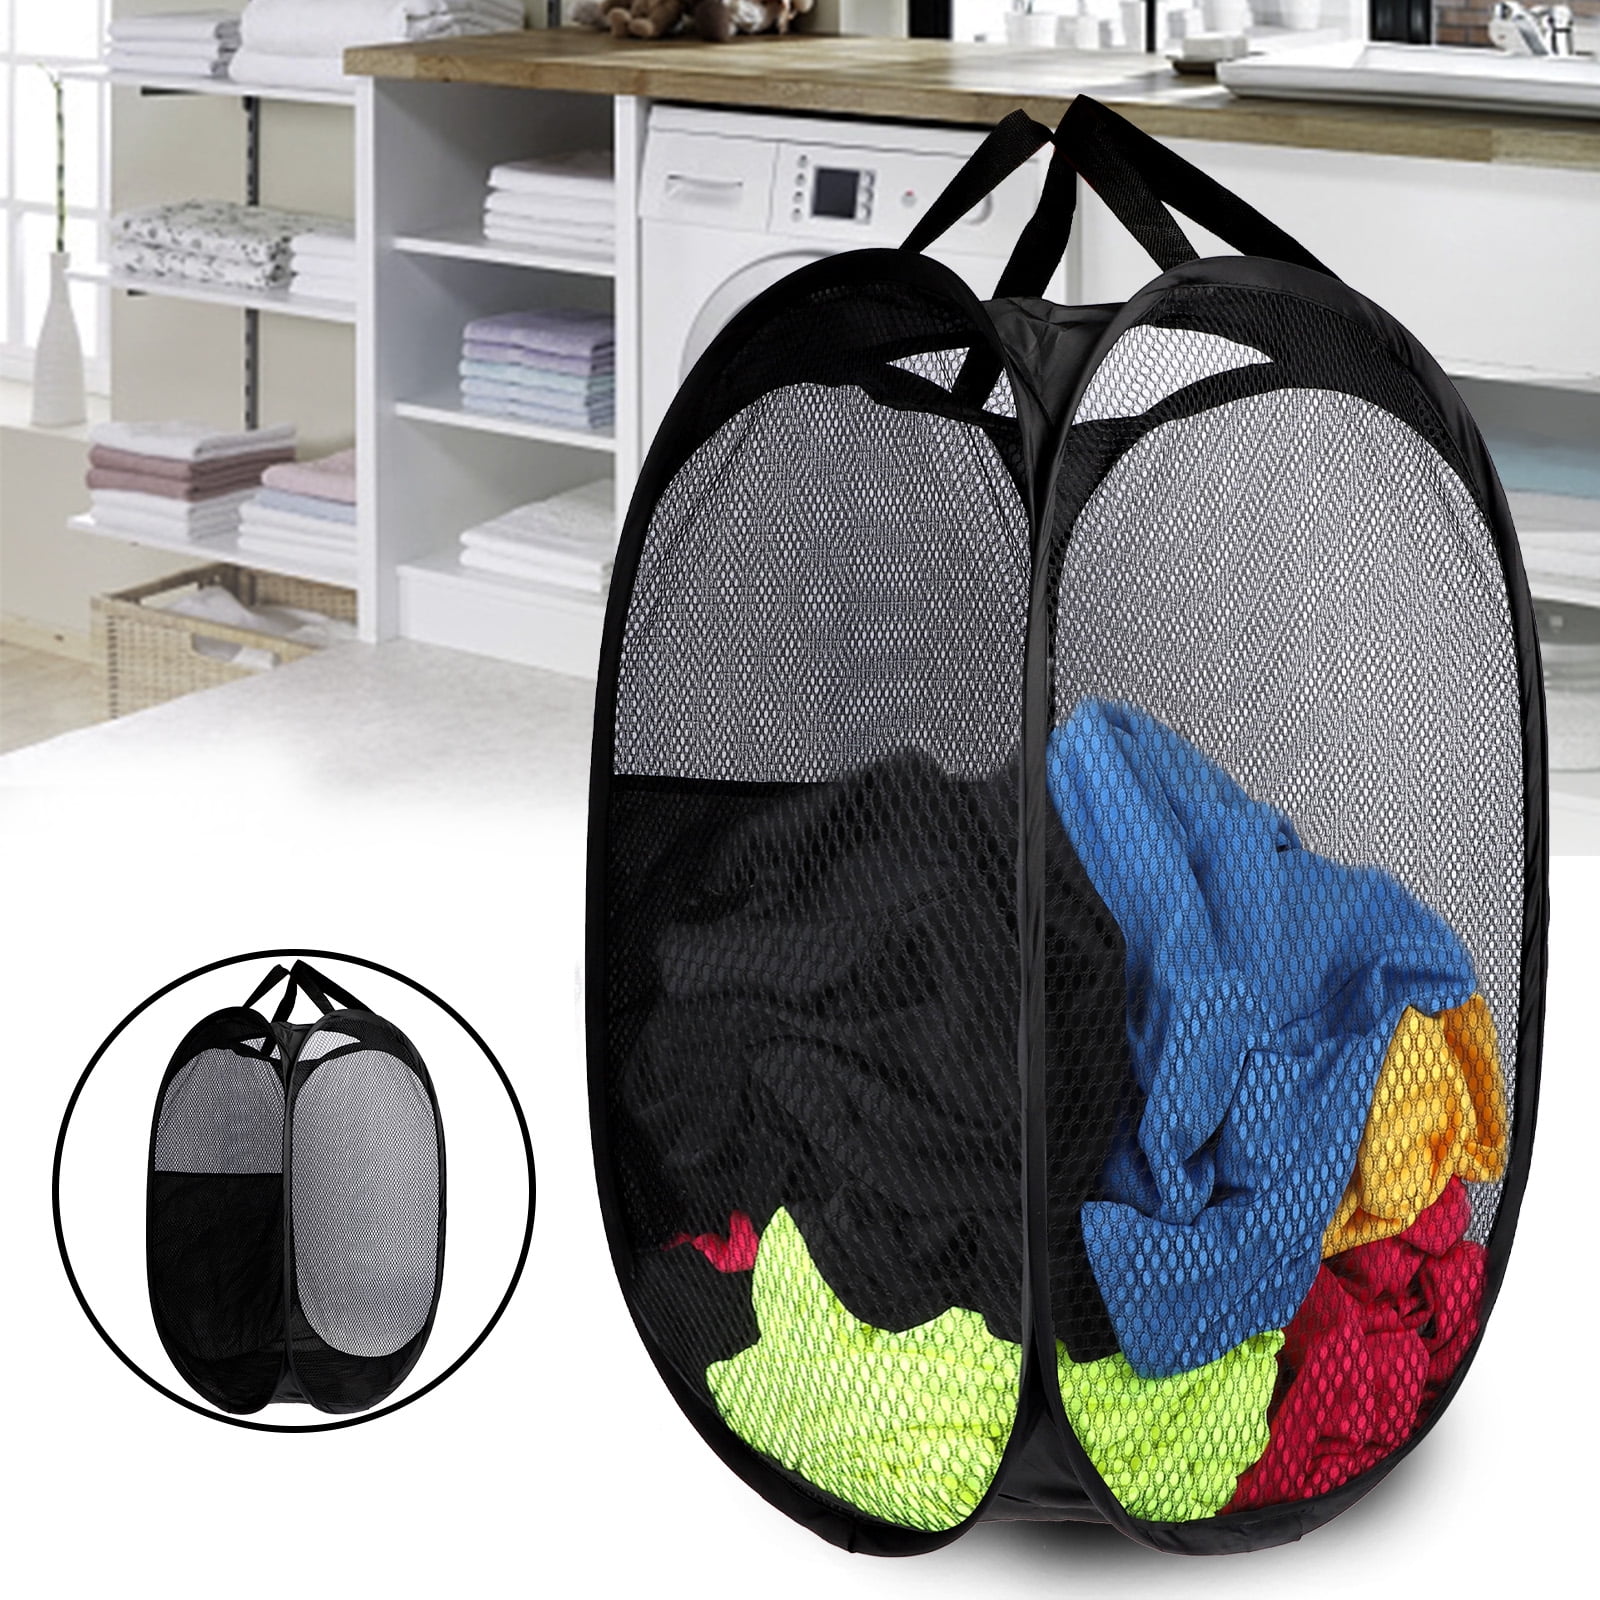 4 x Laundry Baskets Foldable Pop Up Mesh Washing Laundry Basket Bag Bin Hamper Toy Tidy Storage Organiser Organizer Black 